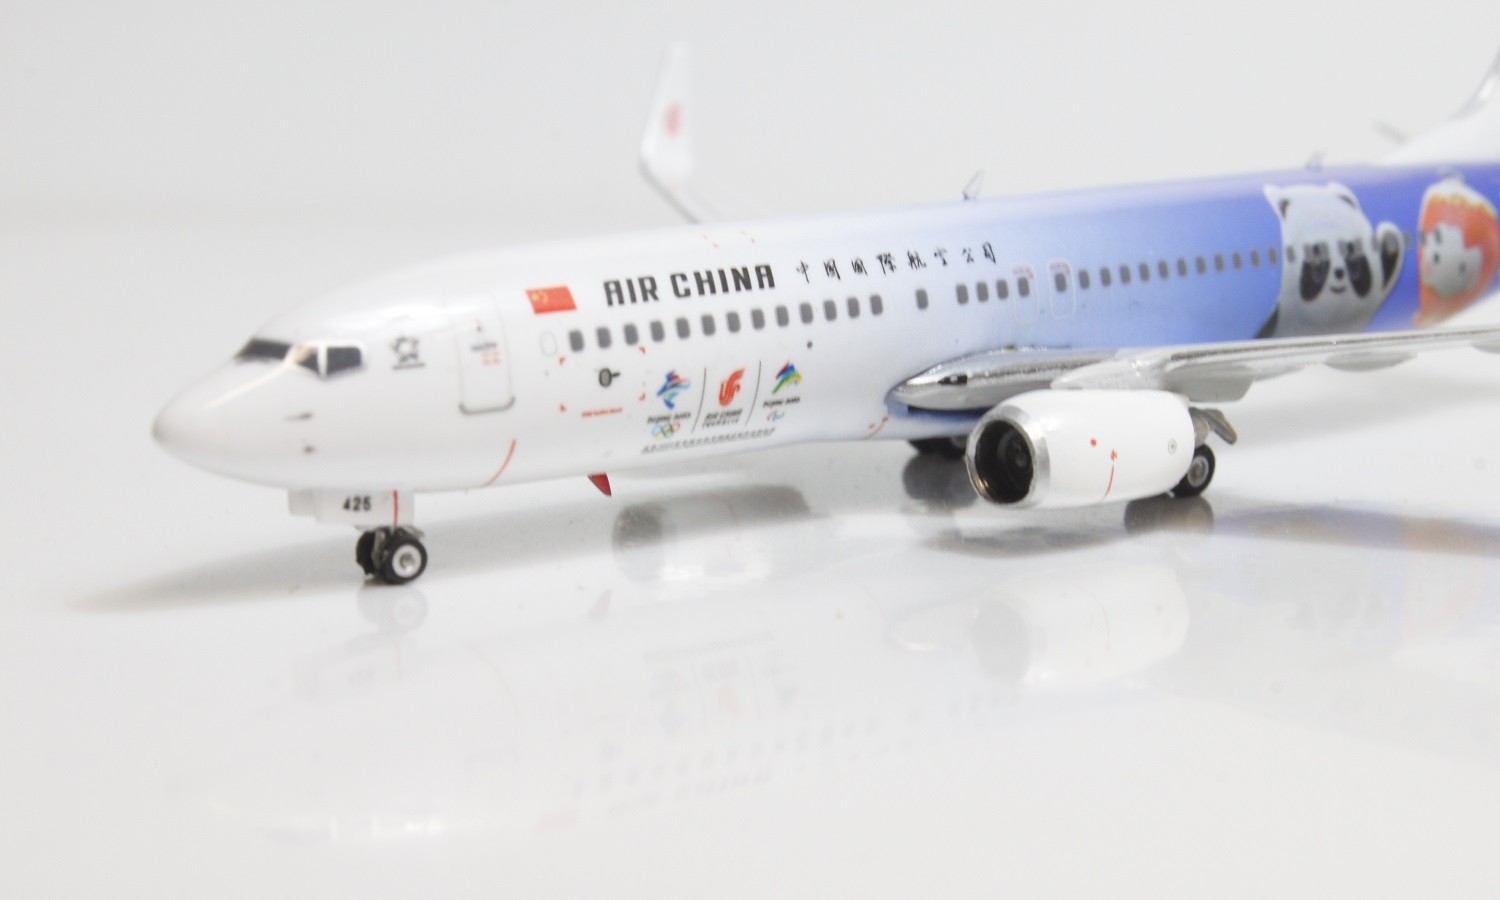 Air China Boeing 737-800w B-5425 中国国际航空公司Beijing Olympic Winter Games NG  Models 58081 scale 1:400